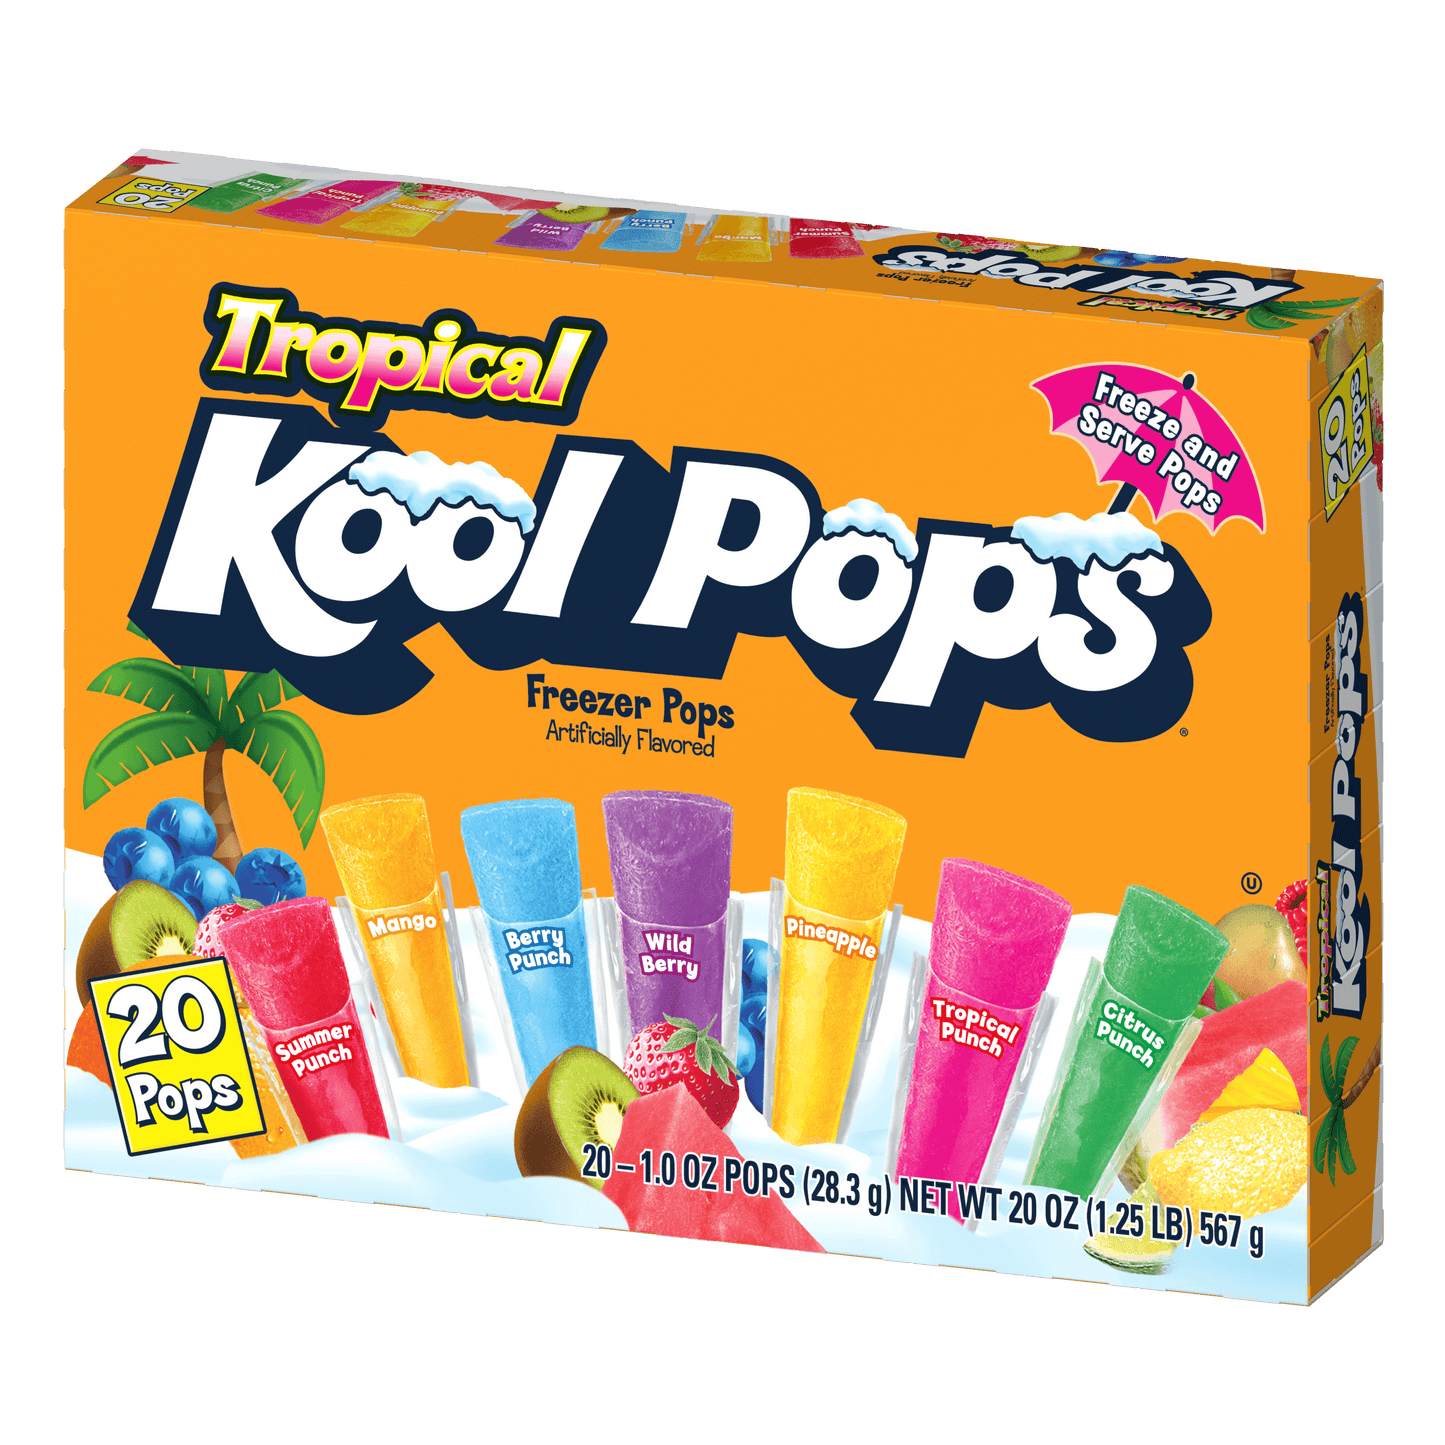 Tropical Kool Pops freezer pops packaging